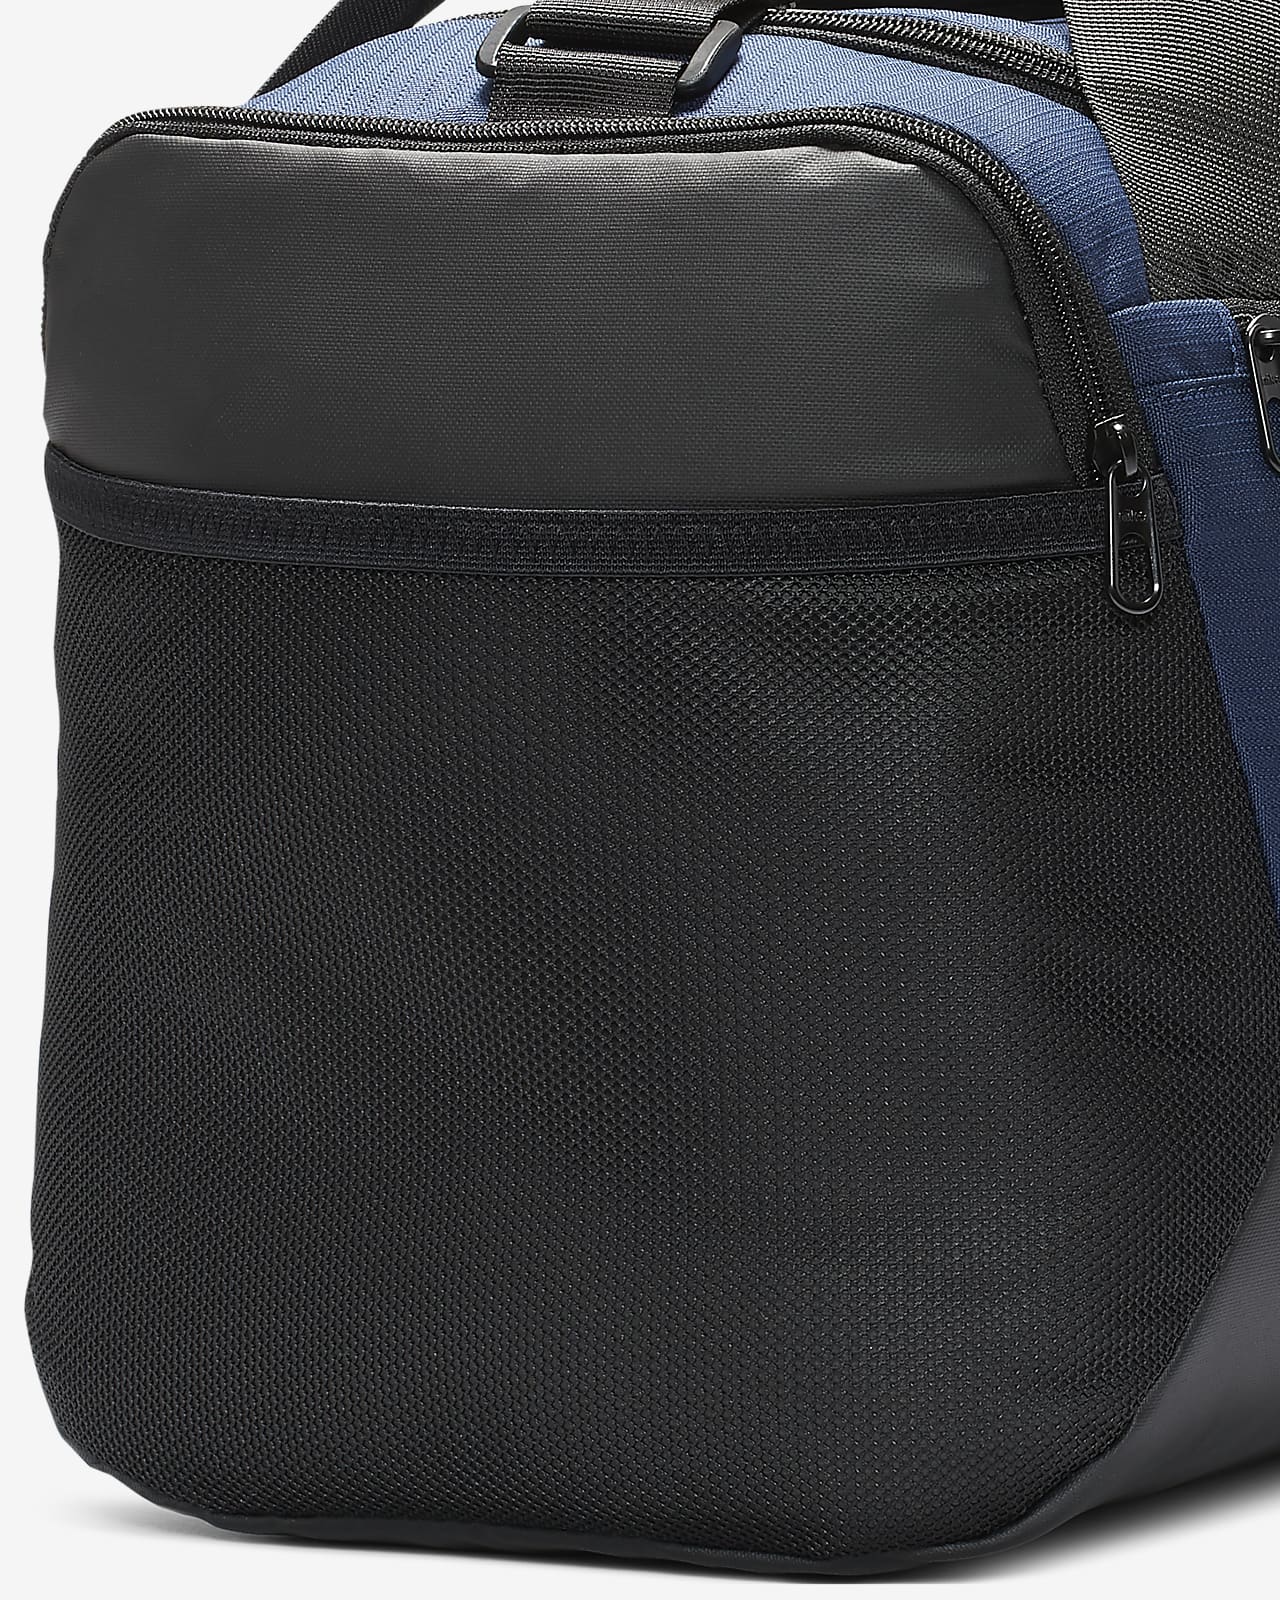 Nike Brasilia Small Duffel Bag SKU:8800603 